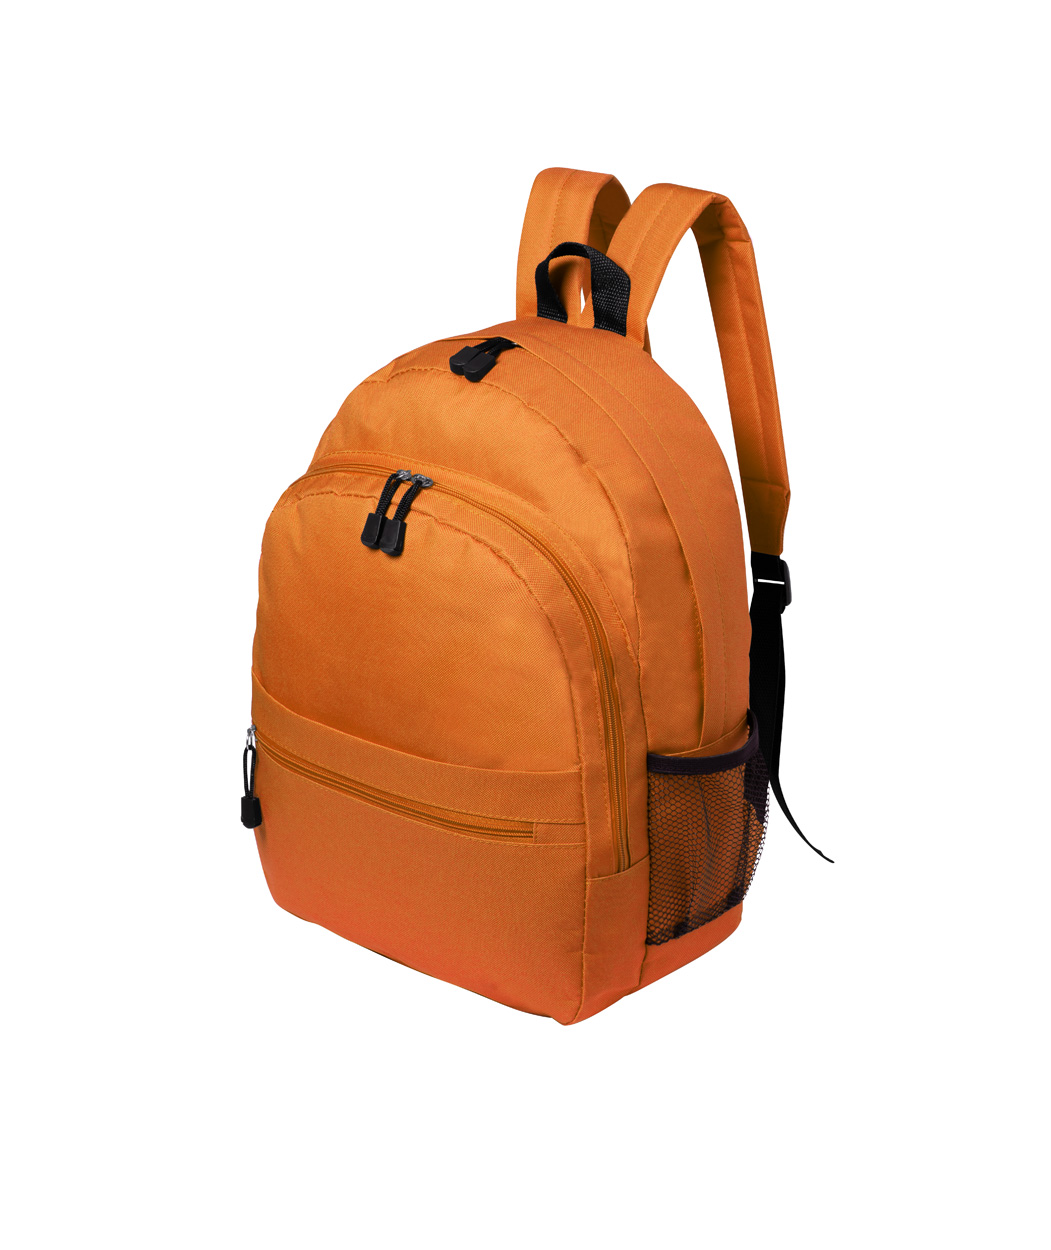 Ventix backpack - orange